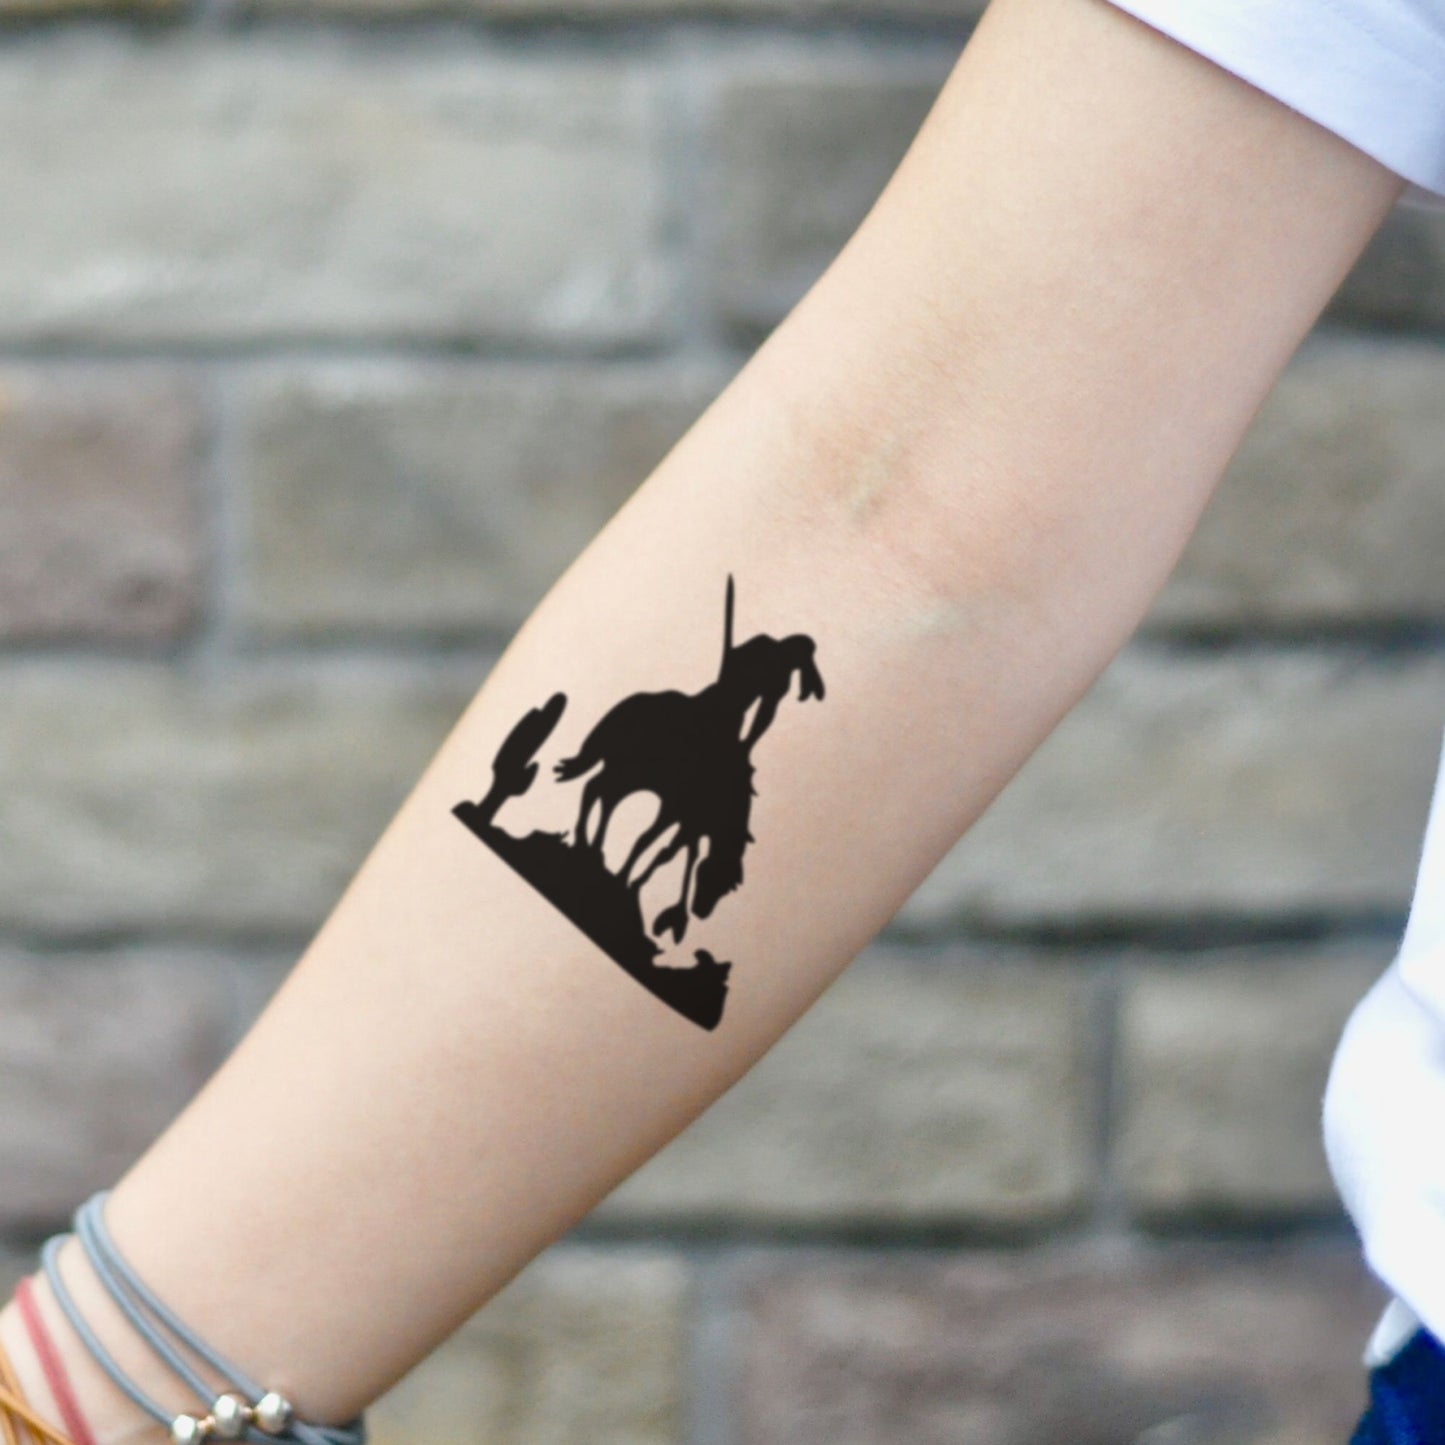 fake small trail of tears native american indian minimalist temporary tattoo sticker design idea on inner arm